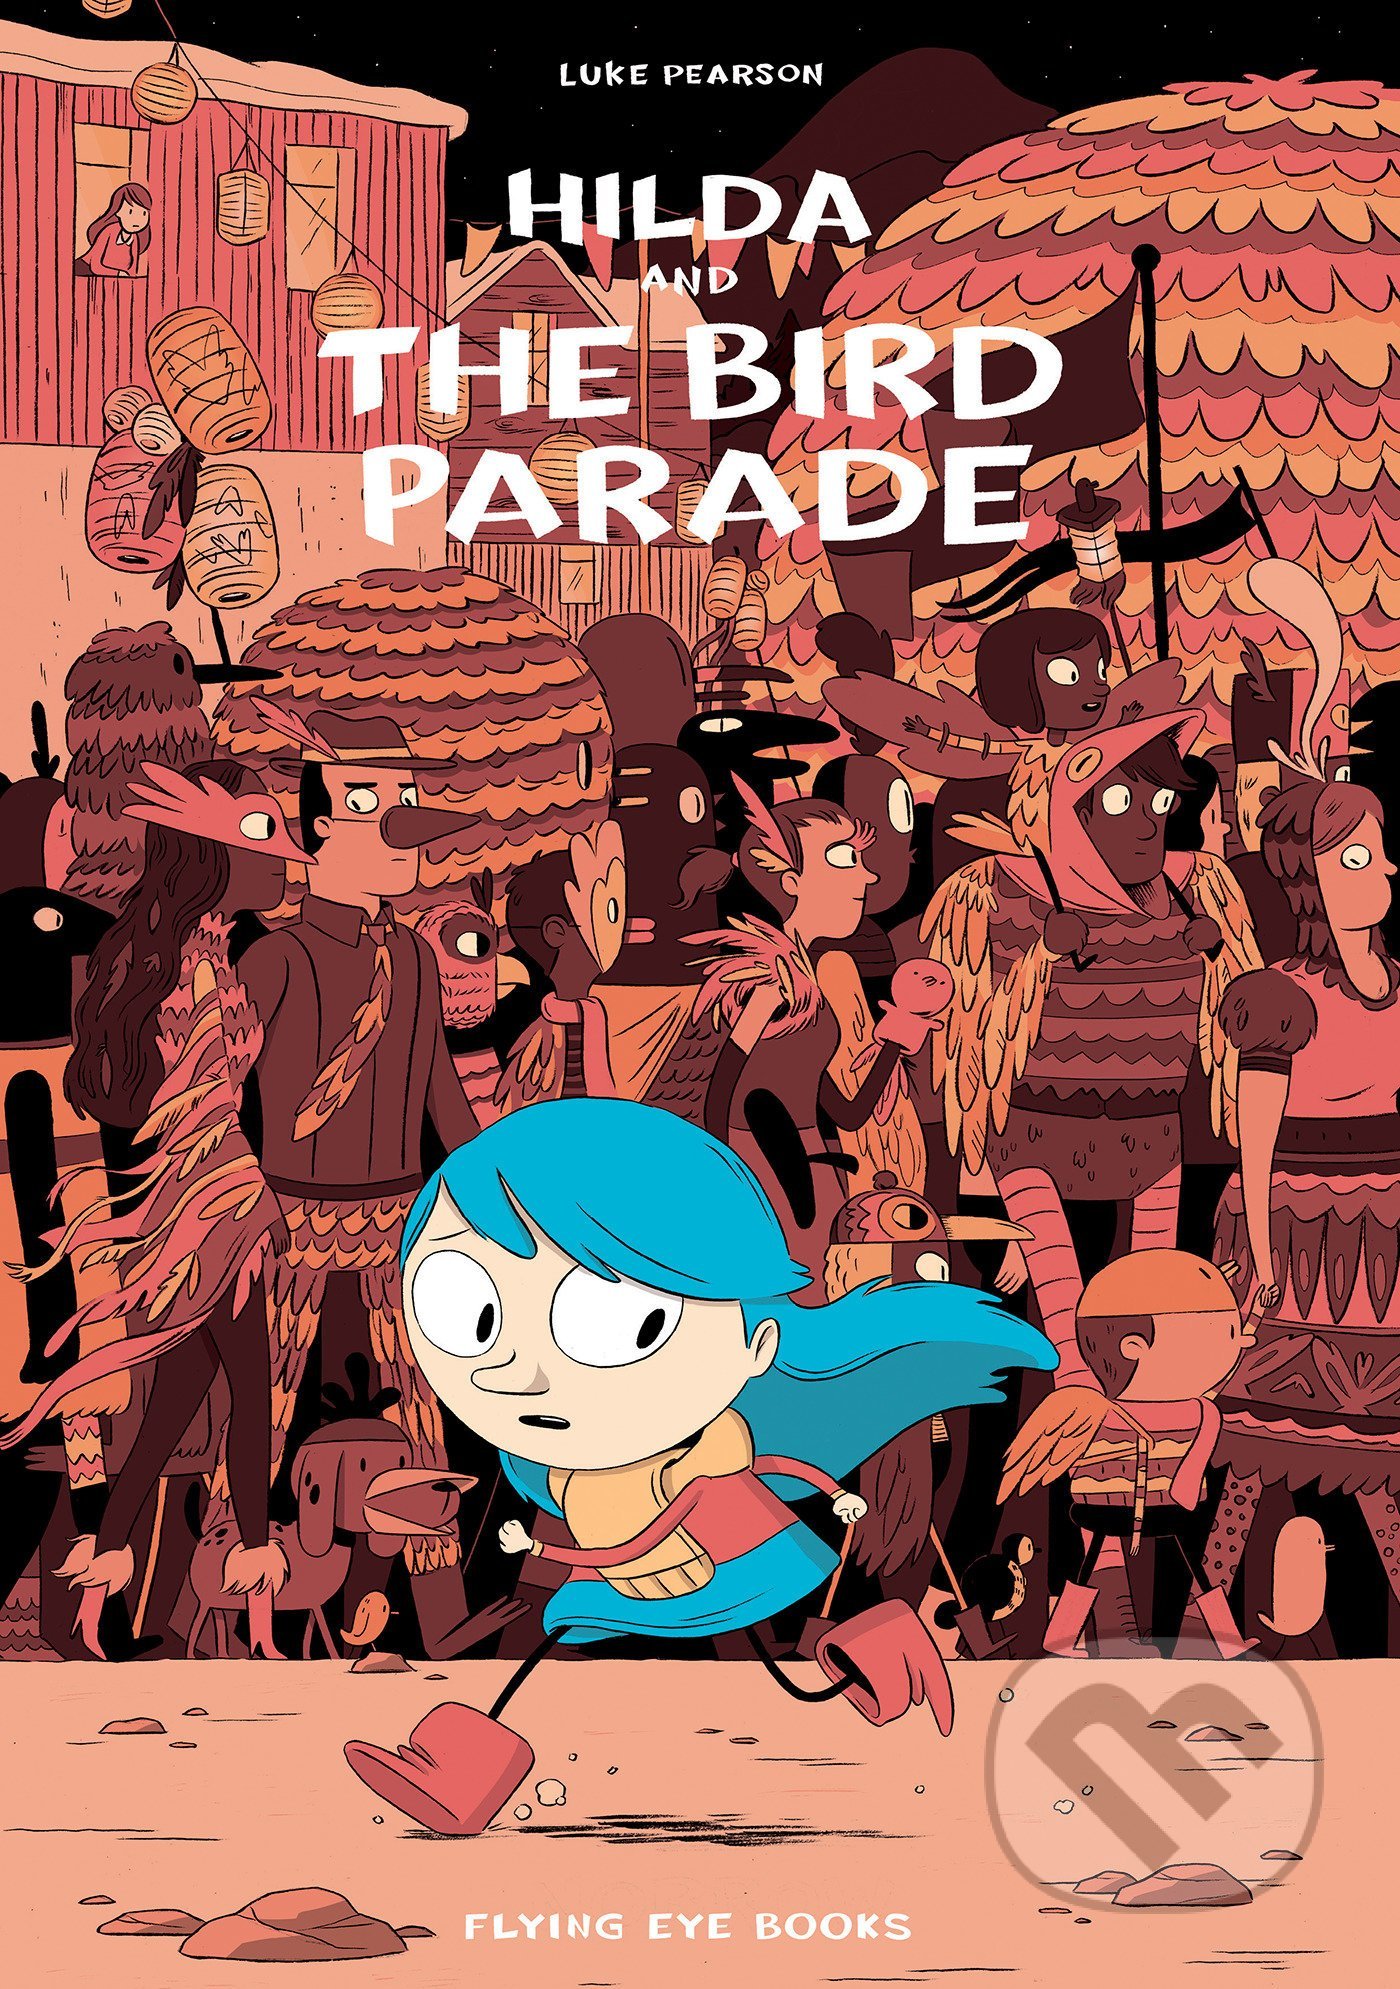 Hilda and the Bird Parade - Luke Pearson, Flying Eye Books, 2016